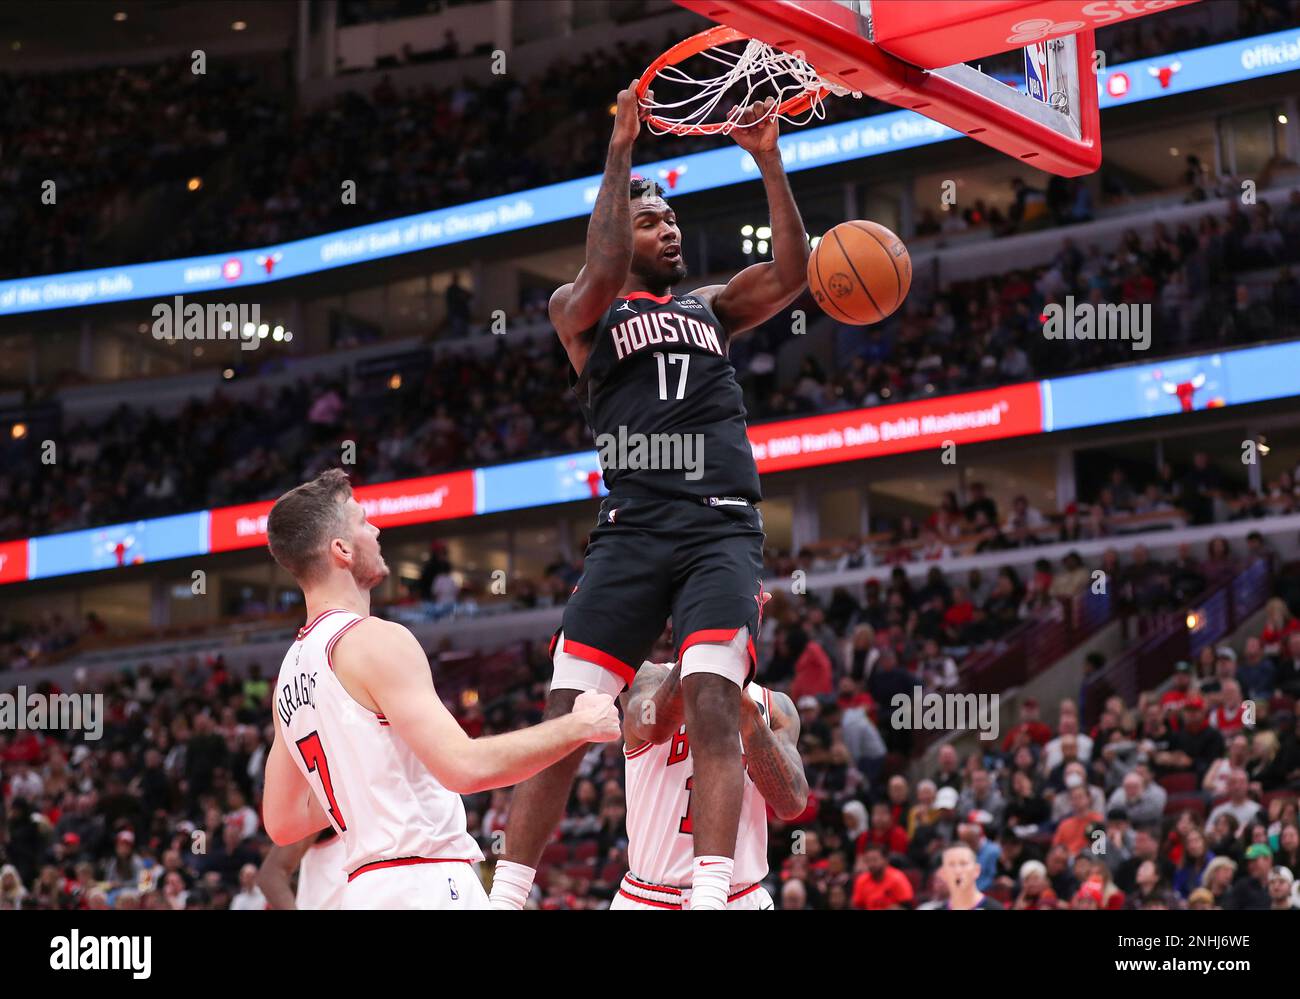 CHICAGO, IL - DECEMBER 26: Houston Rockets Forward Tari Eason (17) slam dunk  the ball in action during a NBA game between the Houston Rockets and the  Chicago Bulls on December 26